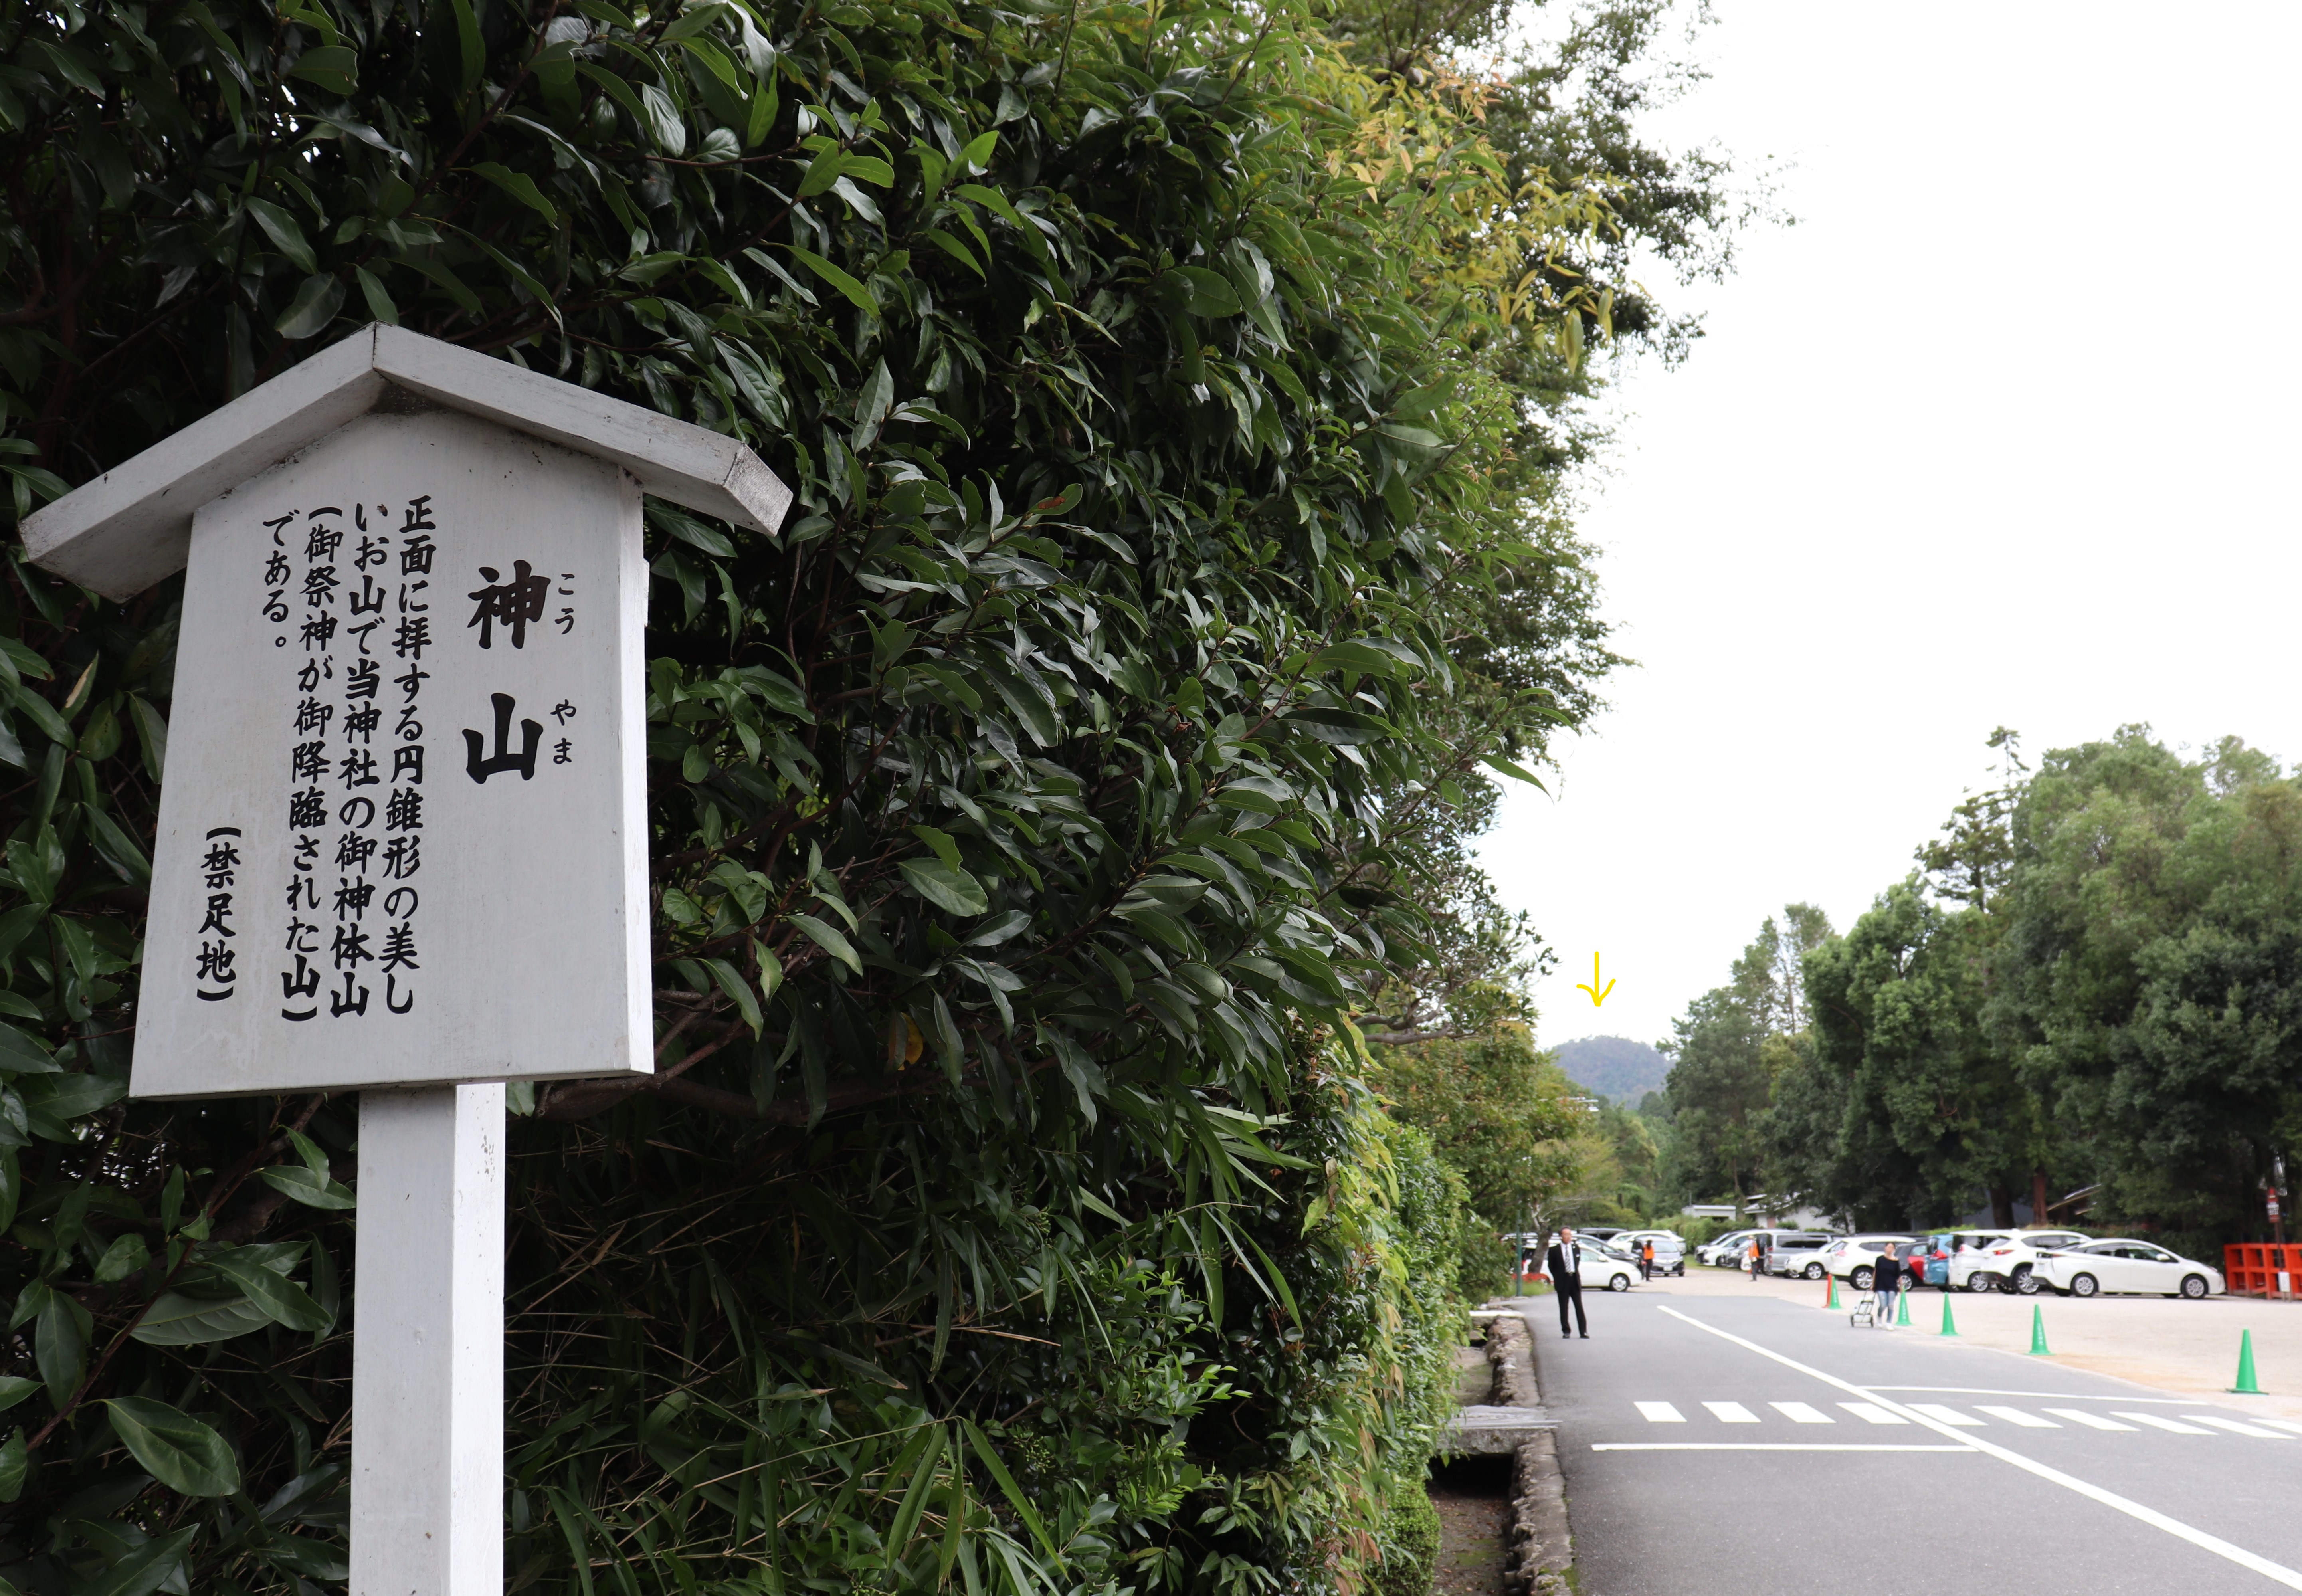 koyama mountain in background near parking lot of kamogami shrine 